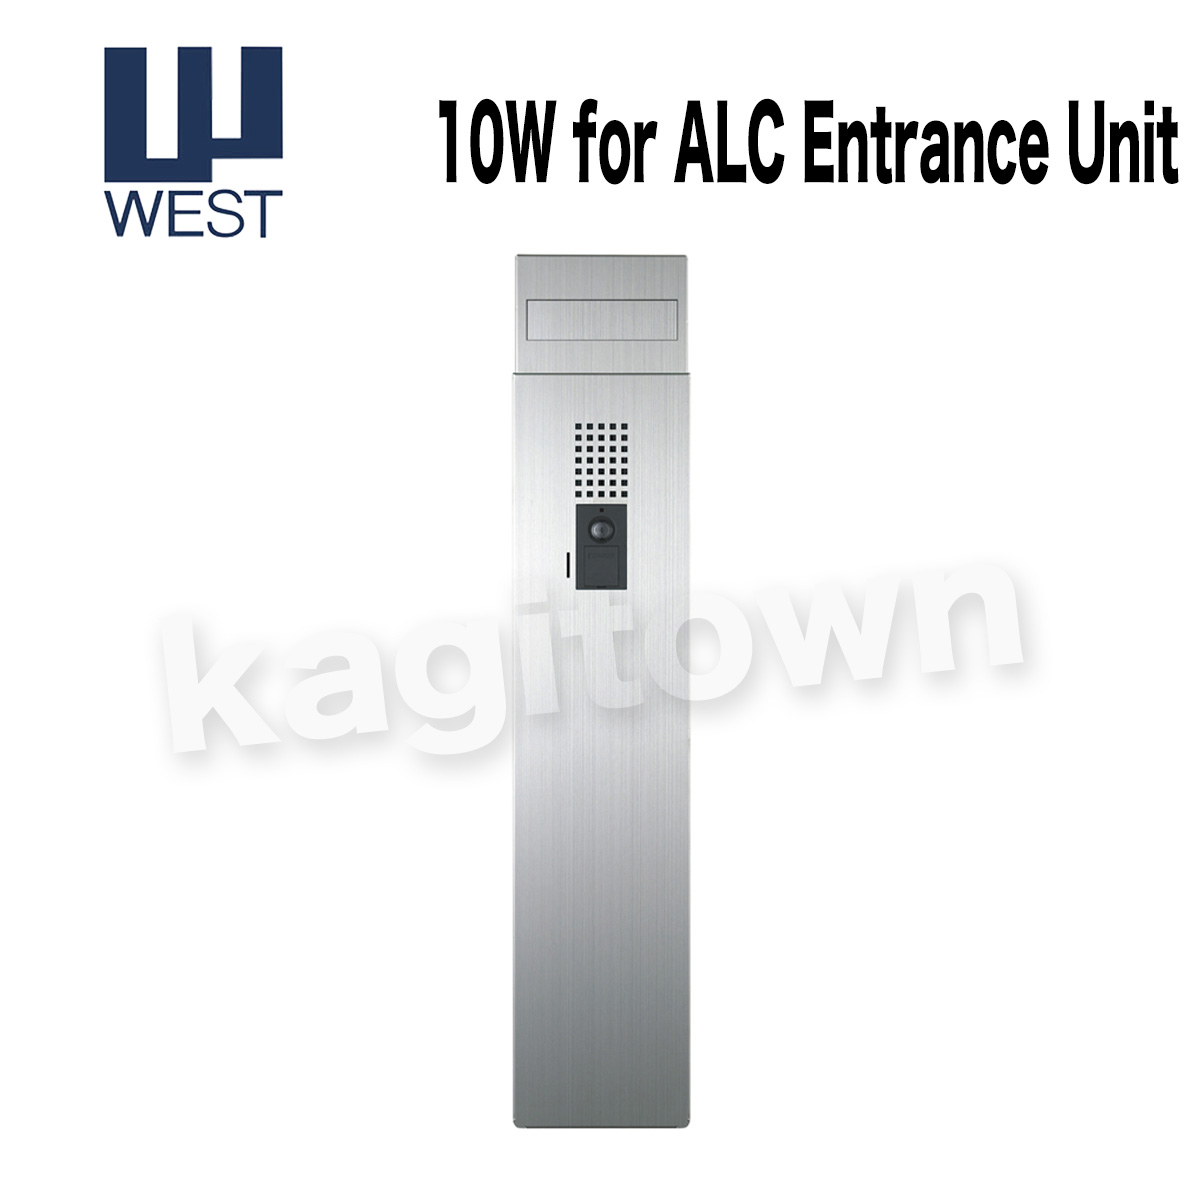 WEST 【ウエスト】玄関ユニット[WEST-10W]10W for ALC Entrance Unit パネルのみインターホン付属なし